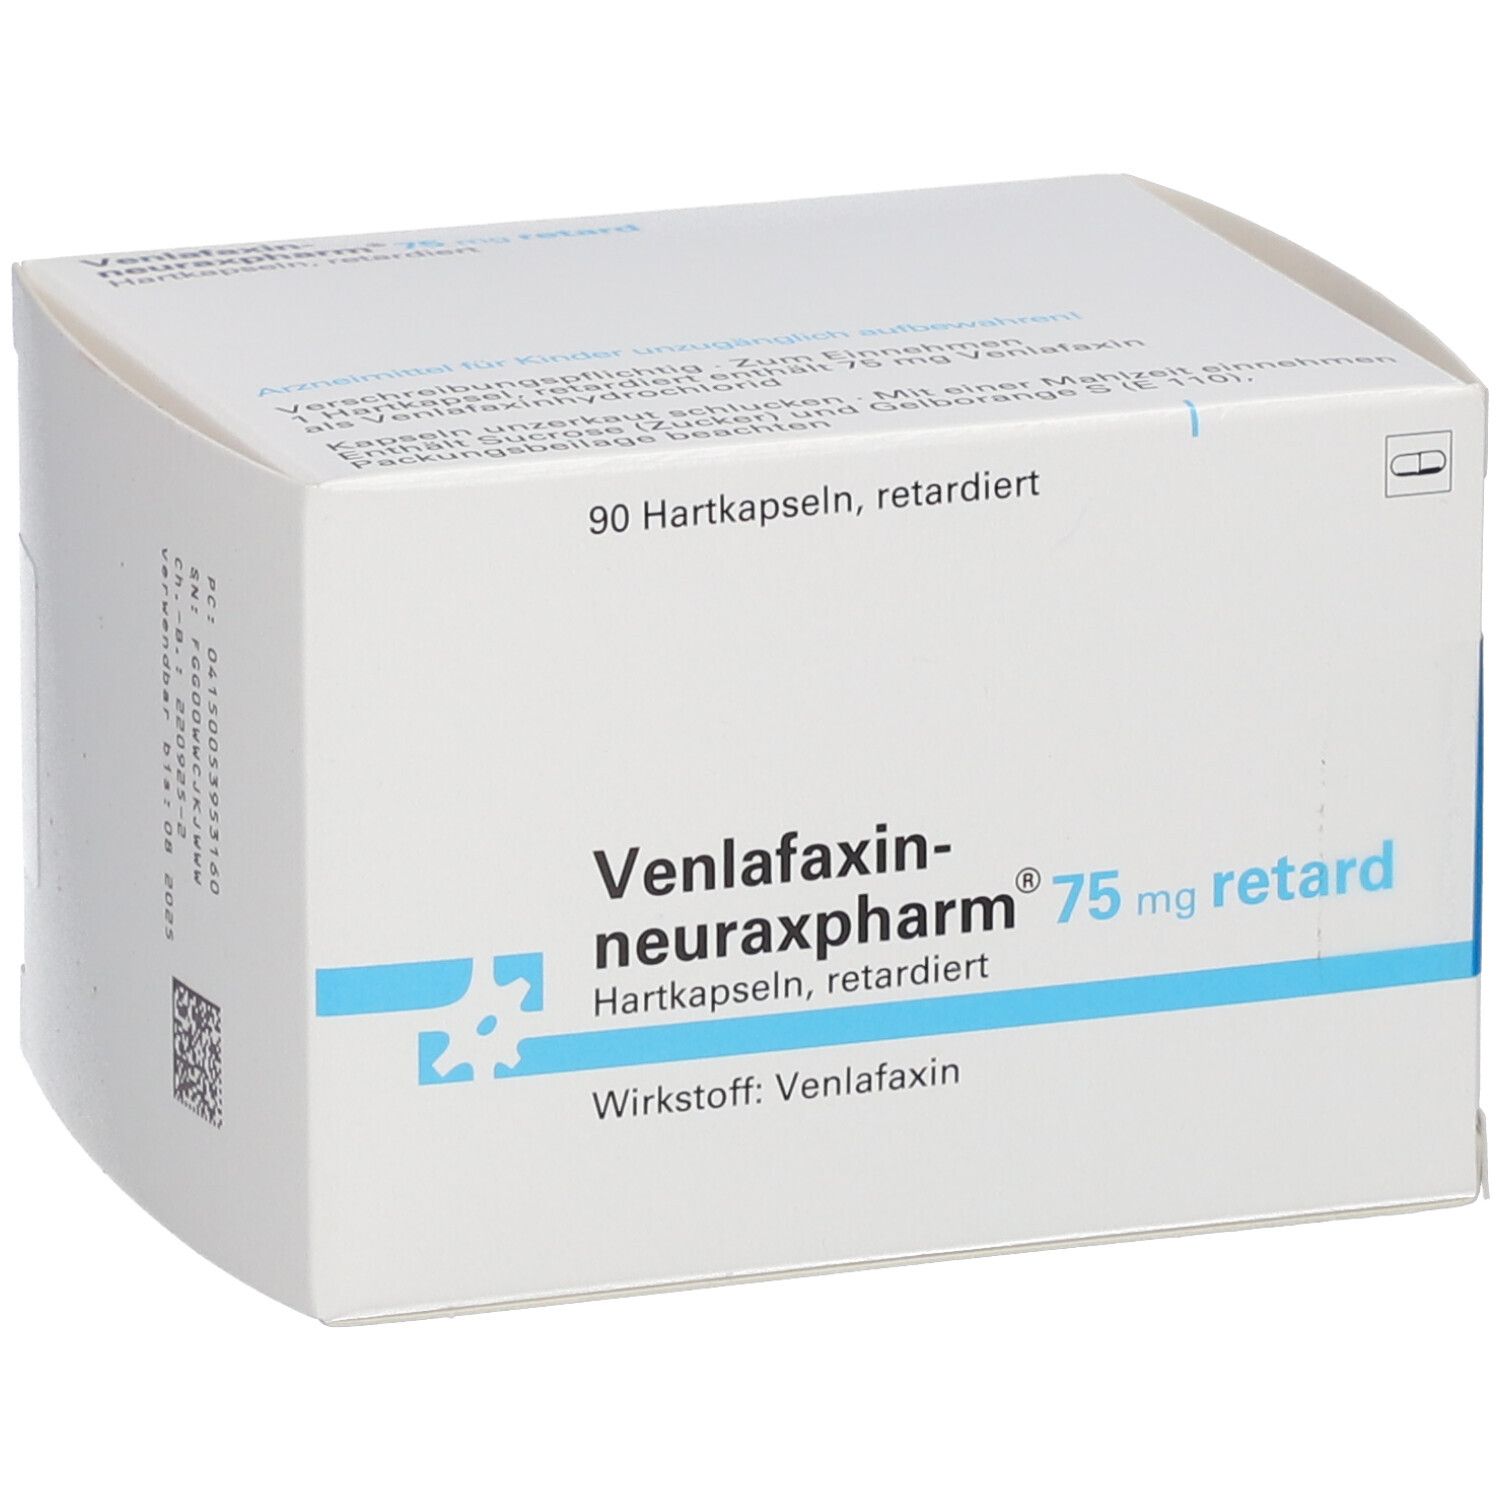 Venlafaxin-neuraxpharm® 75 mg retard